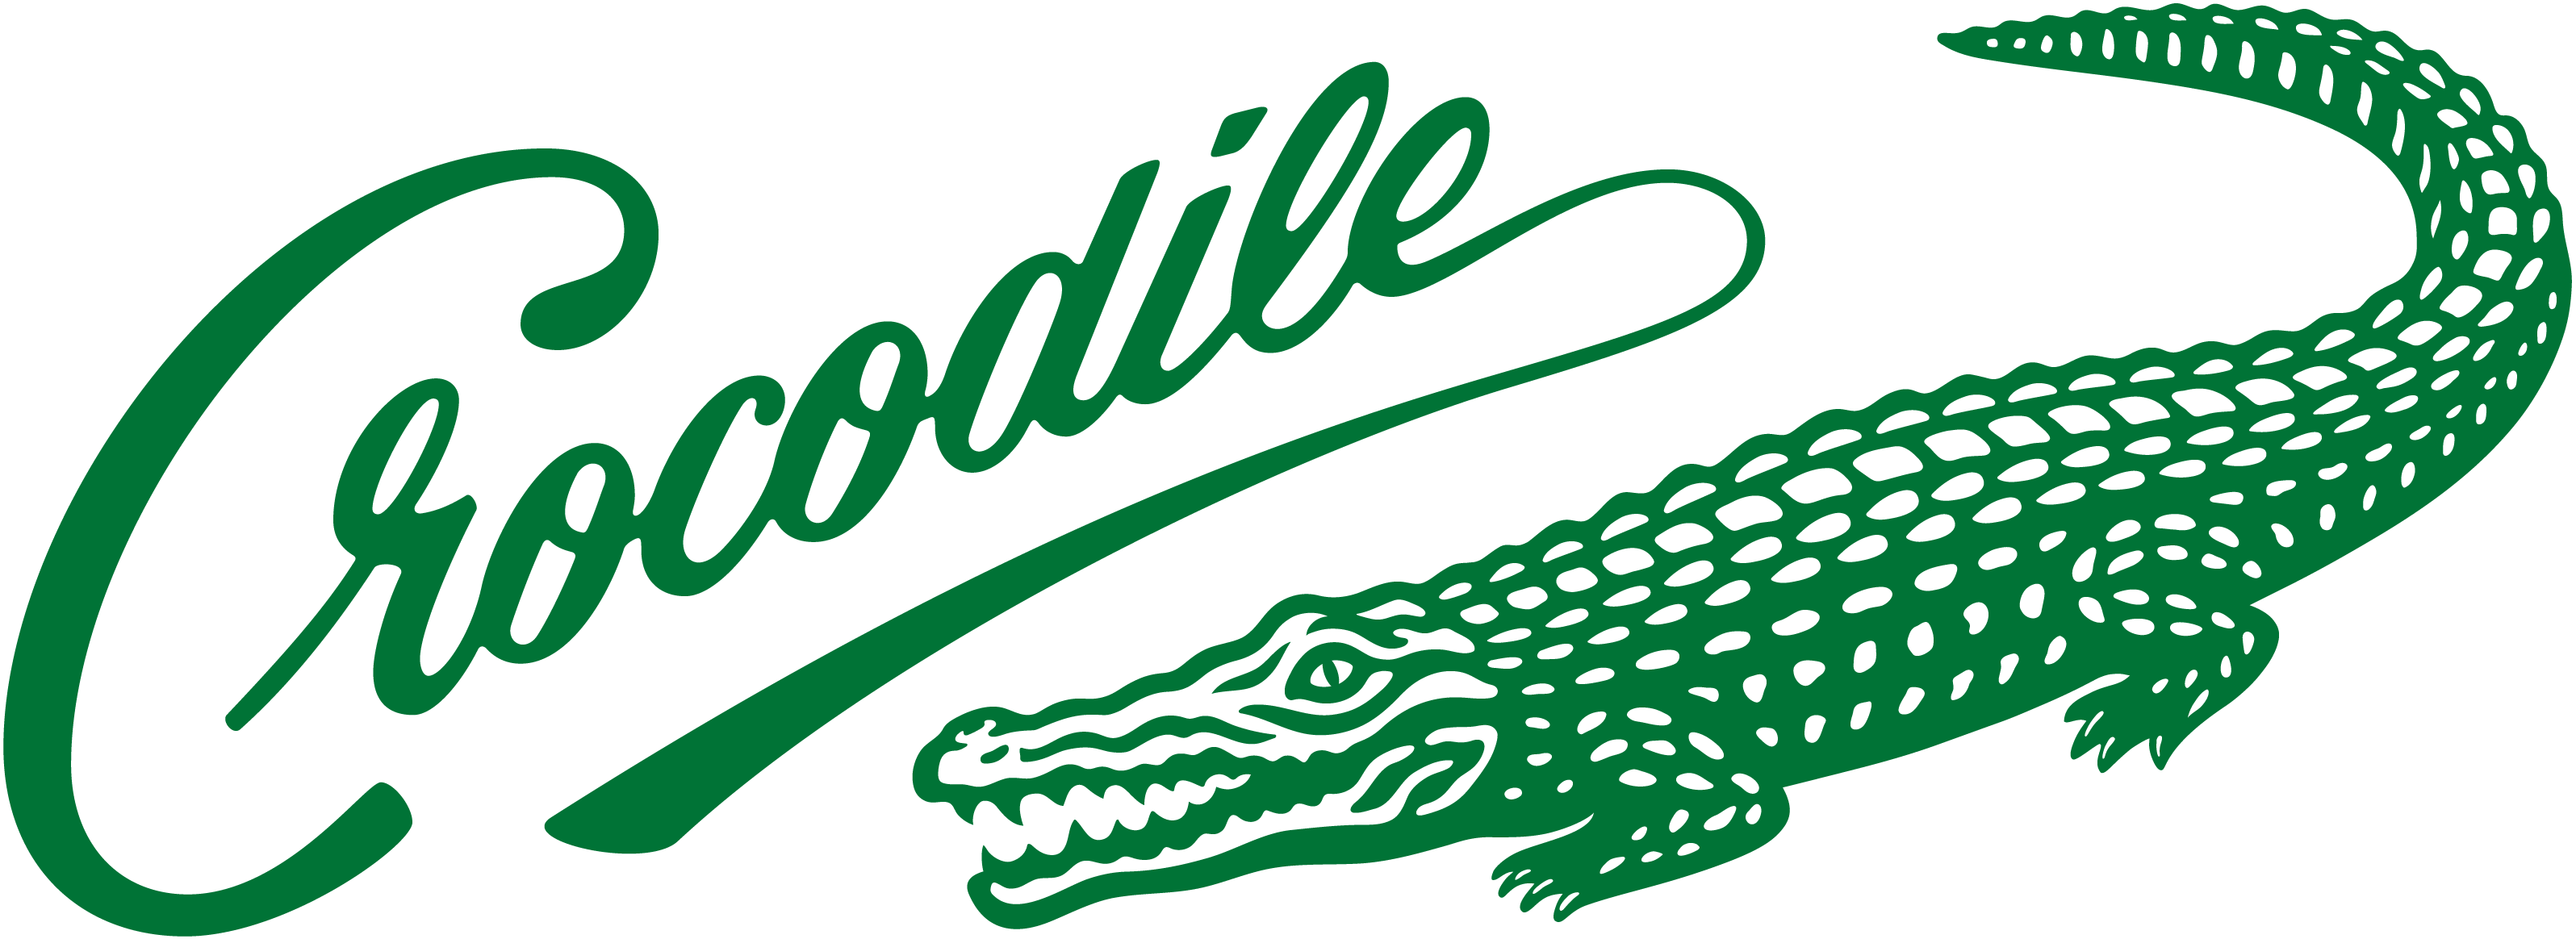 Crocodile Bangladesh Ltd